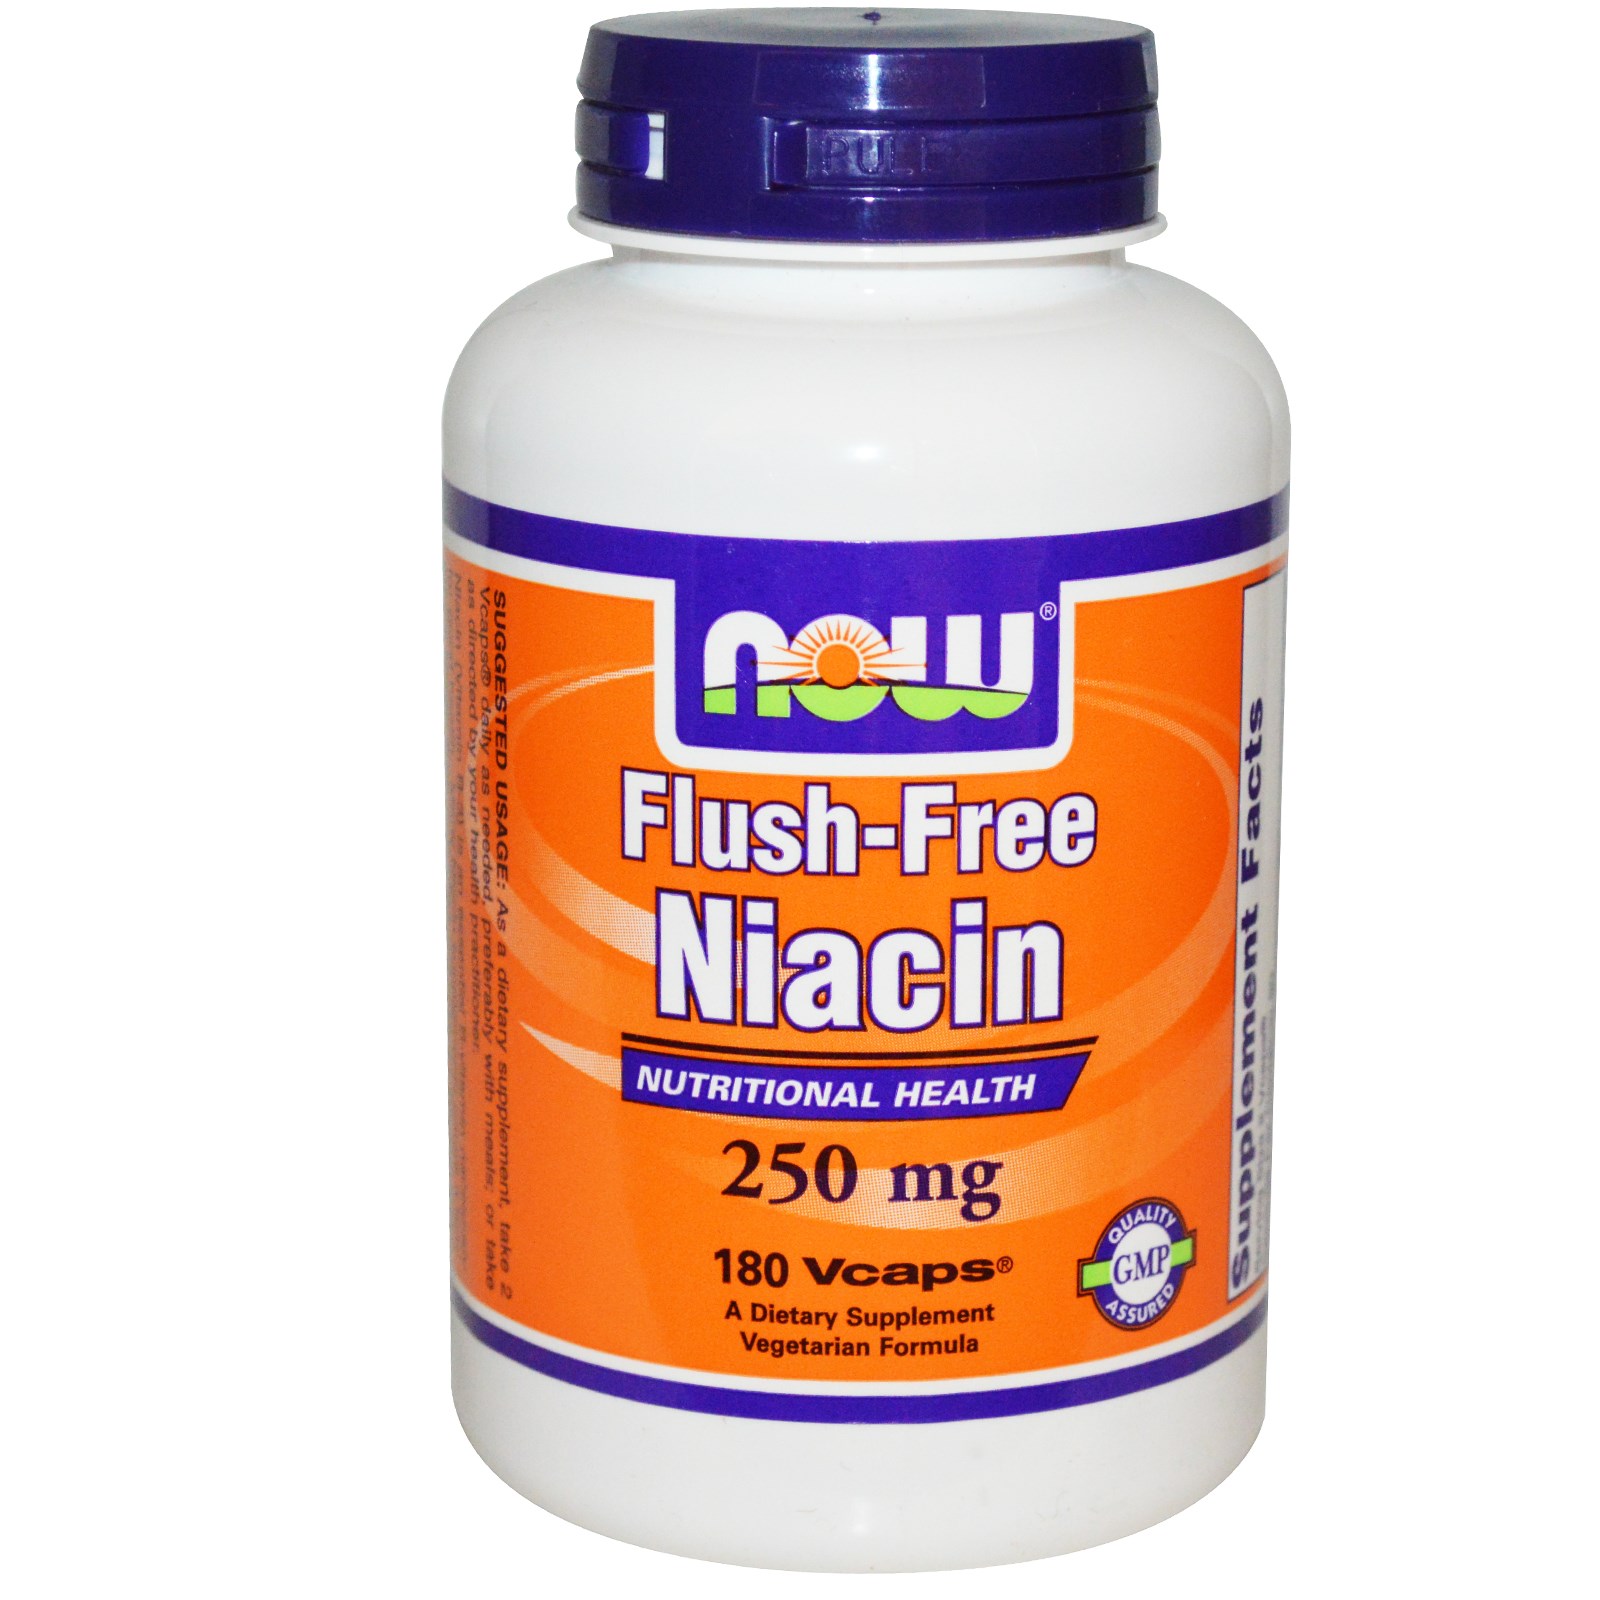 Flush-Free Niacin 250 mg - 180 Vcaps